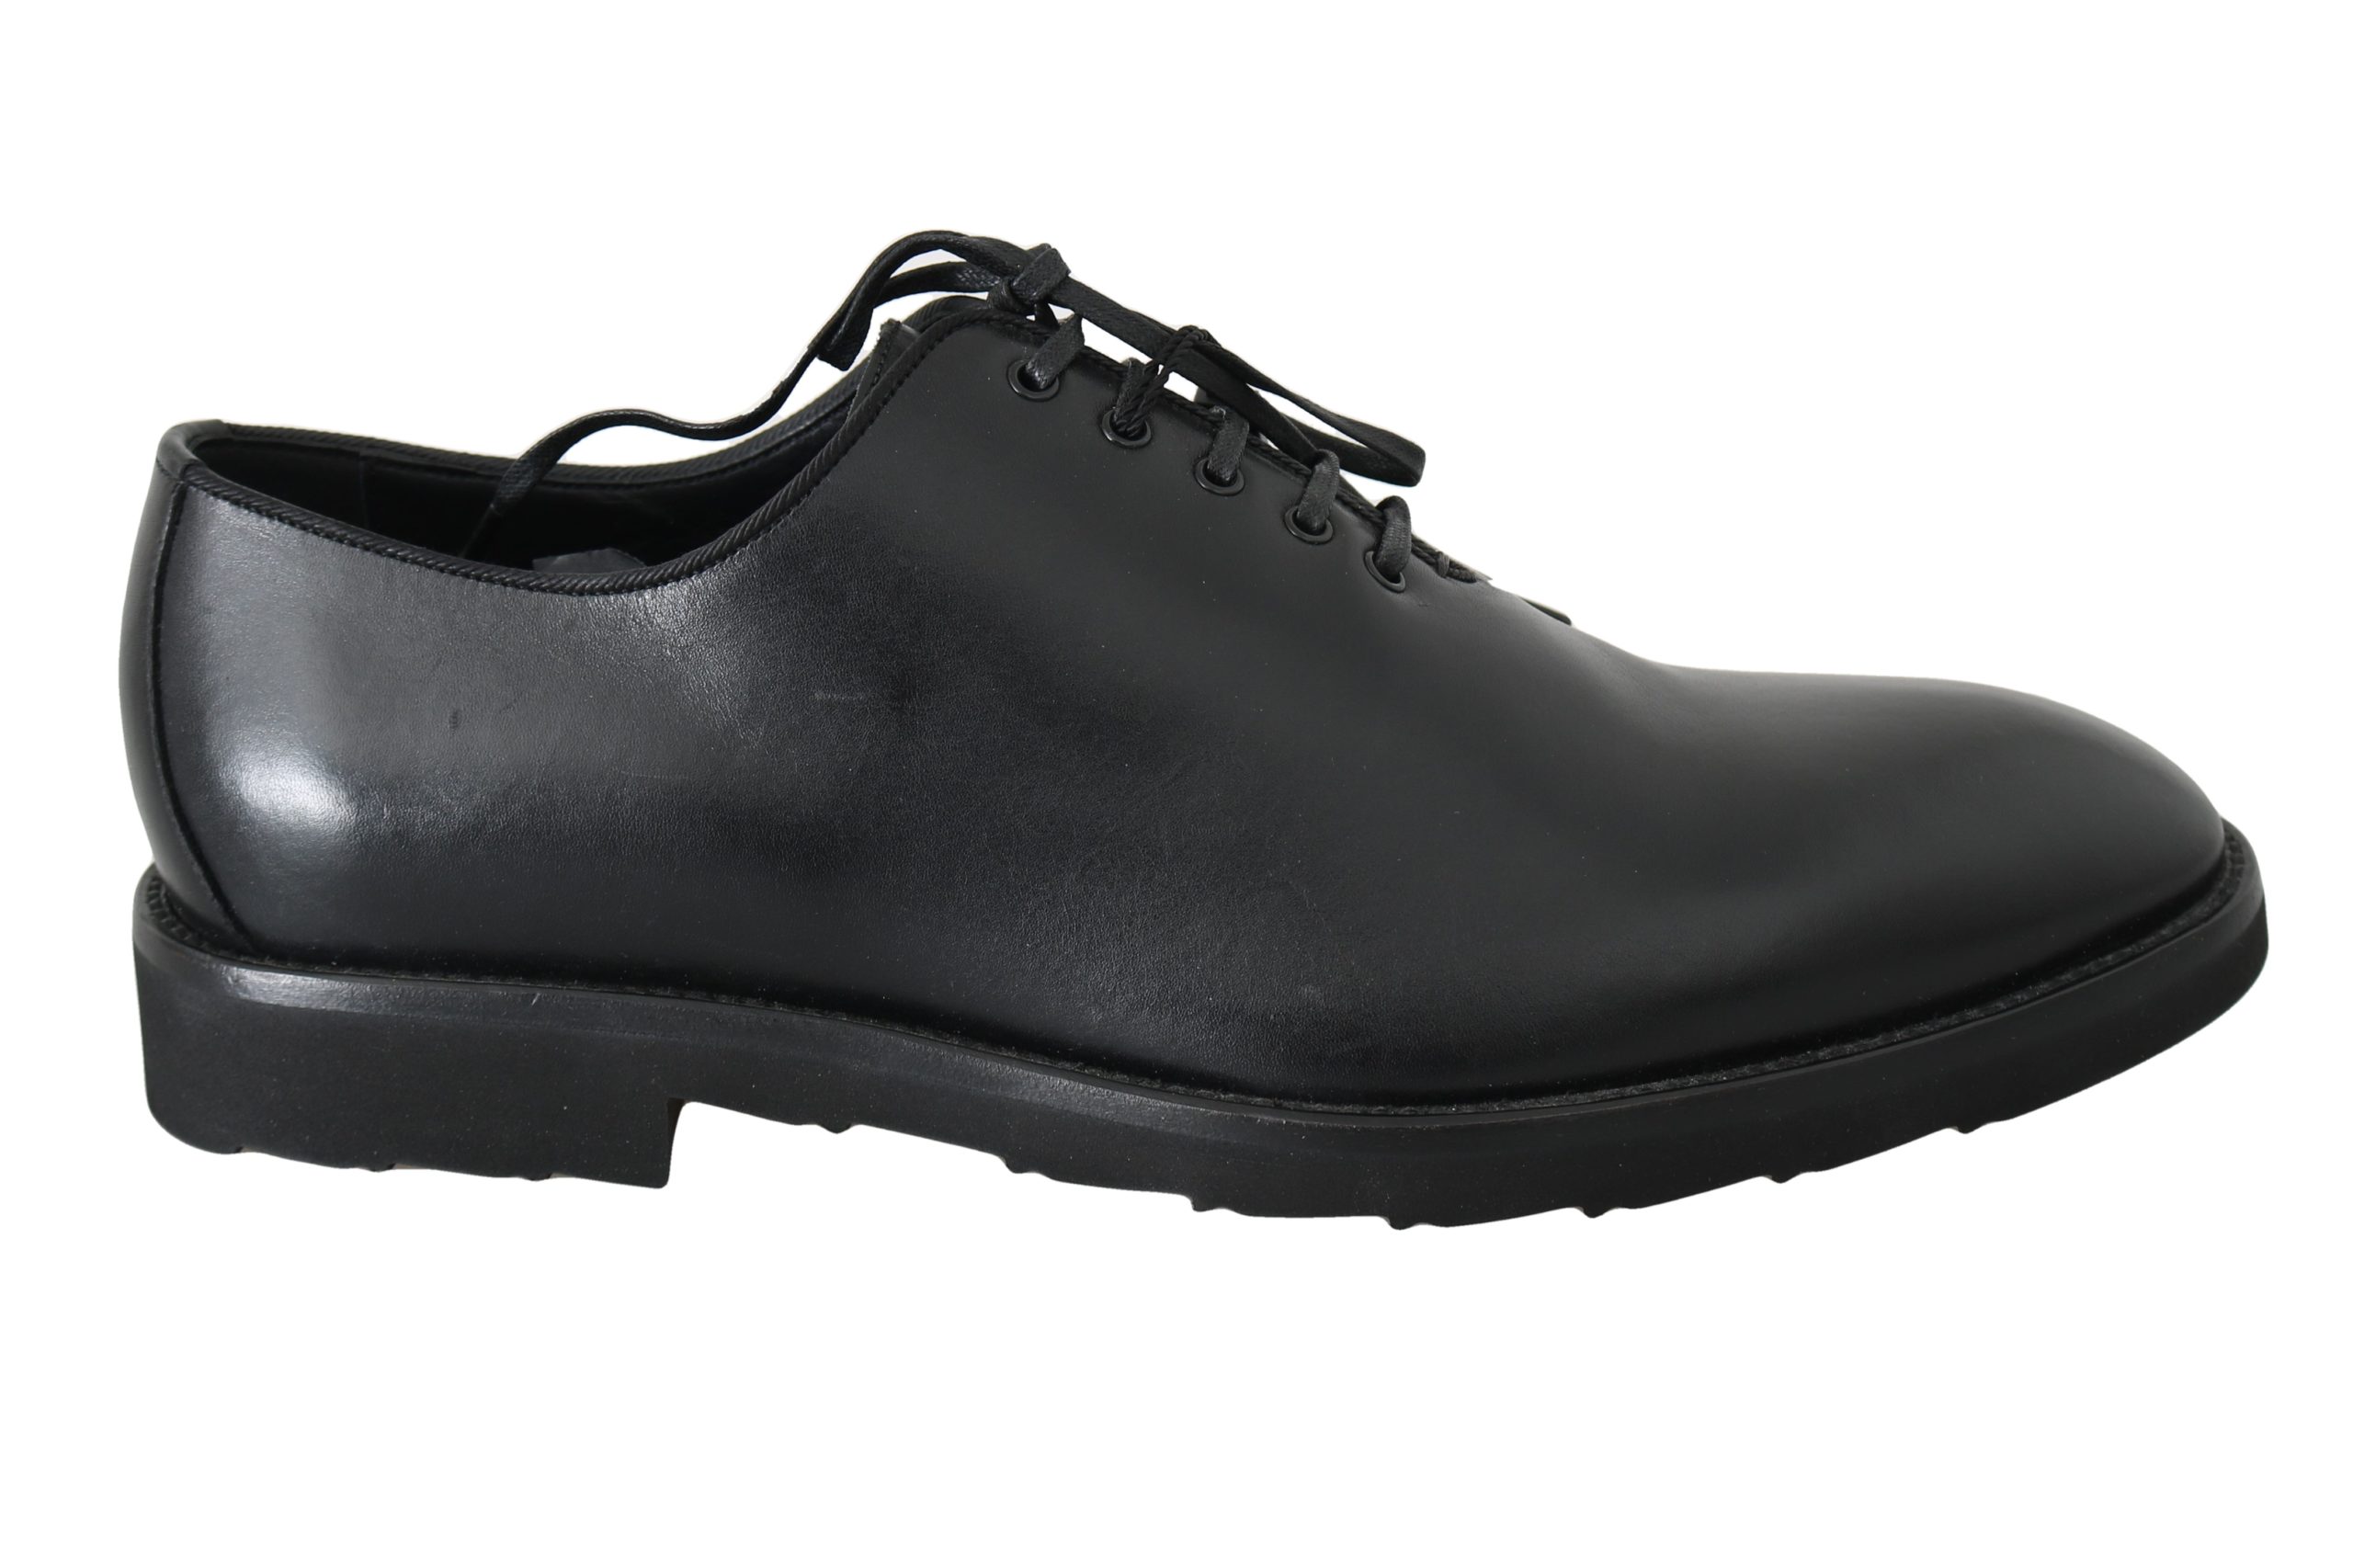 Dolce & Gabbana Men's Leather Derby Dress Shoes Black MV2324 - EU42/US9